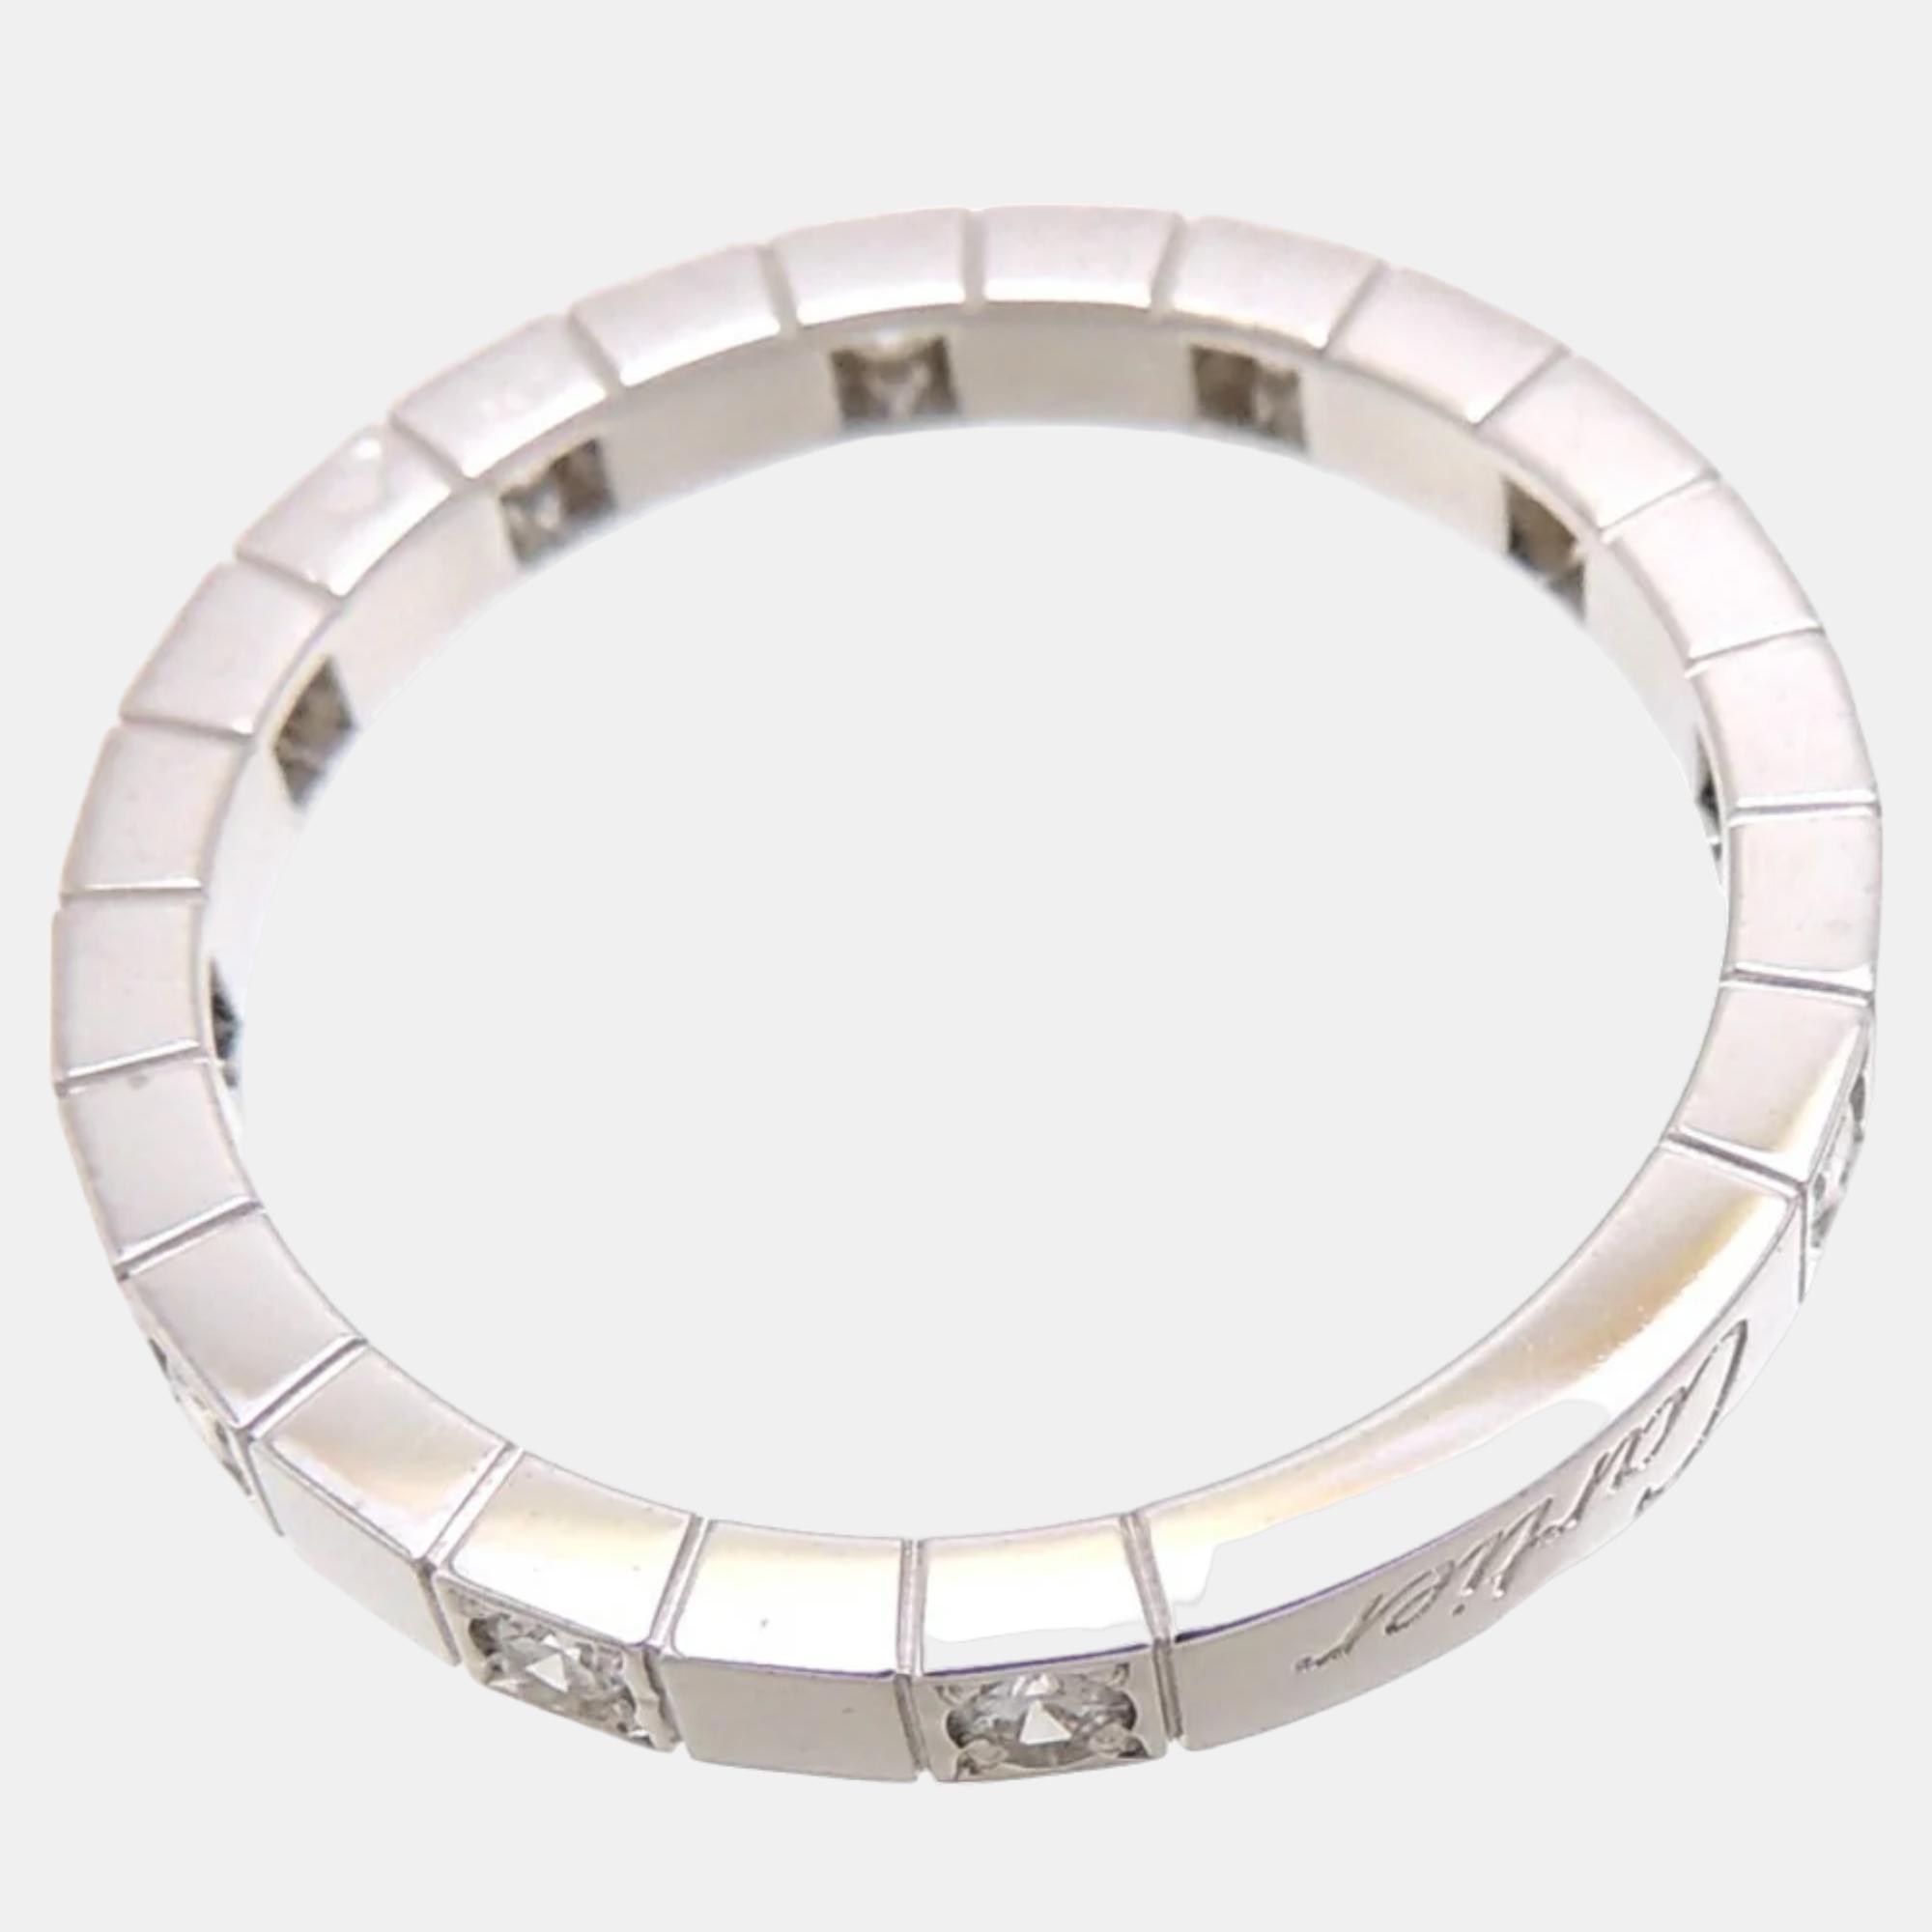 Cartier Lanieres 18K White Gold Diamond Ring EU 66